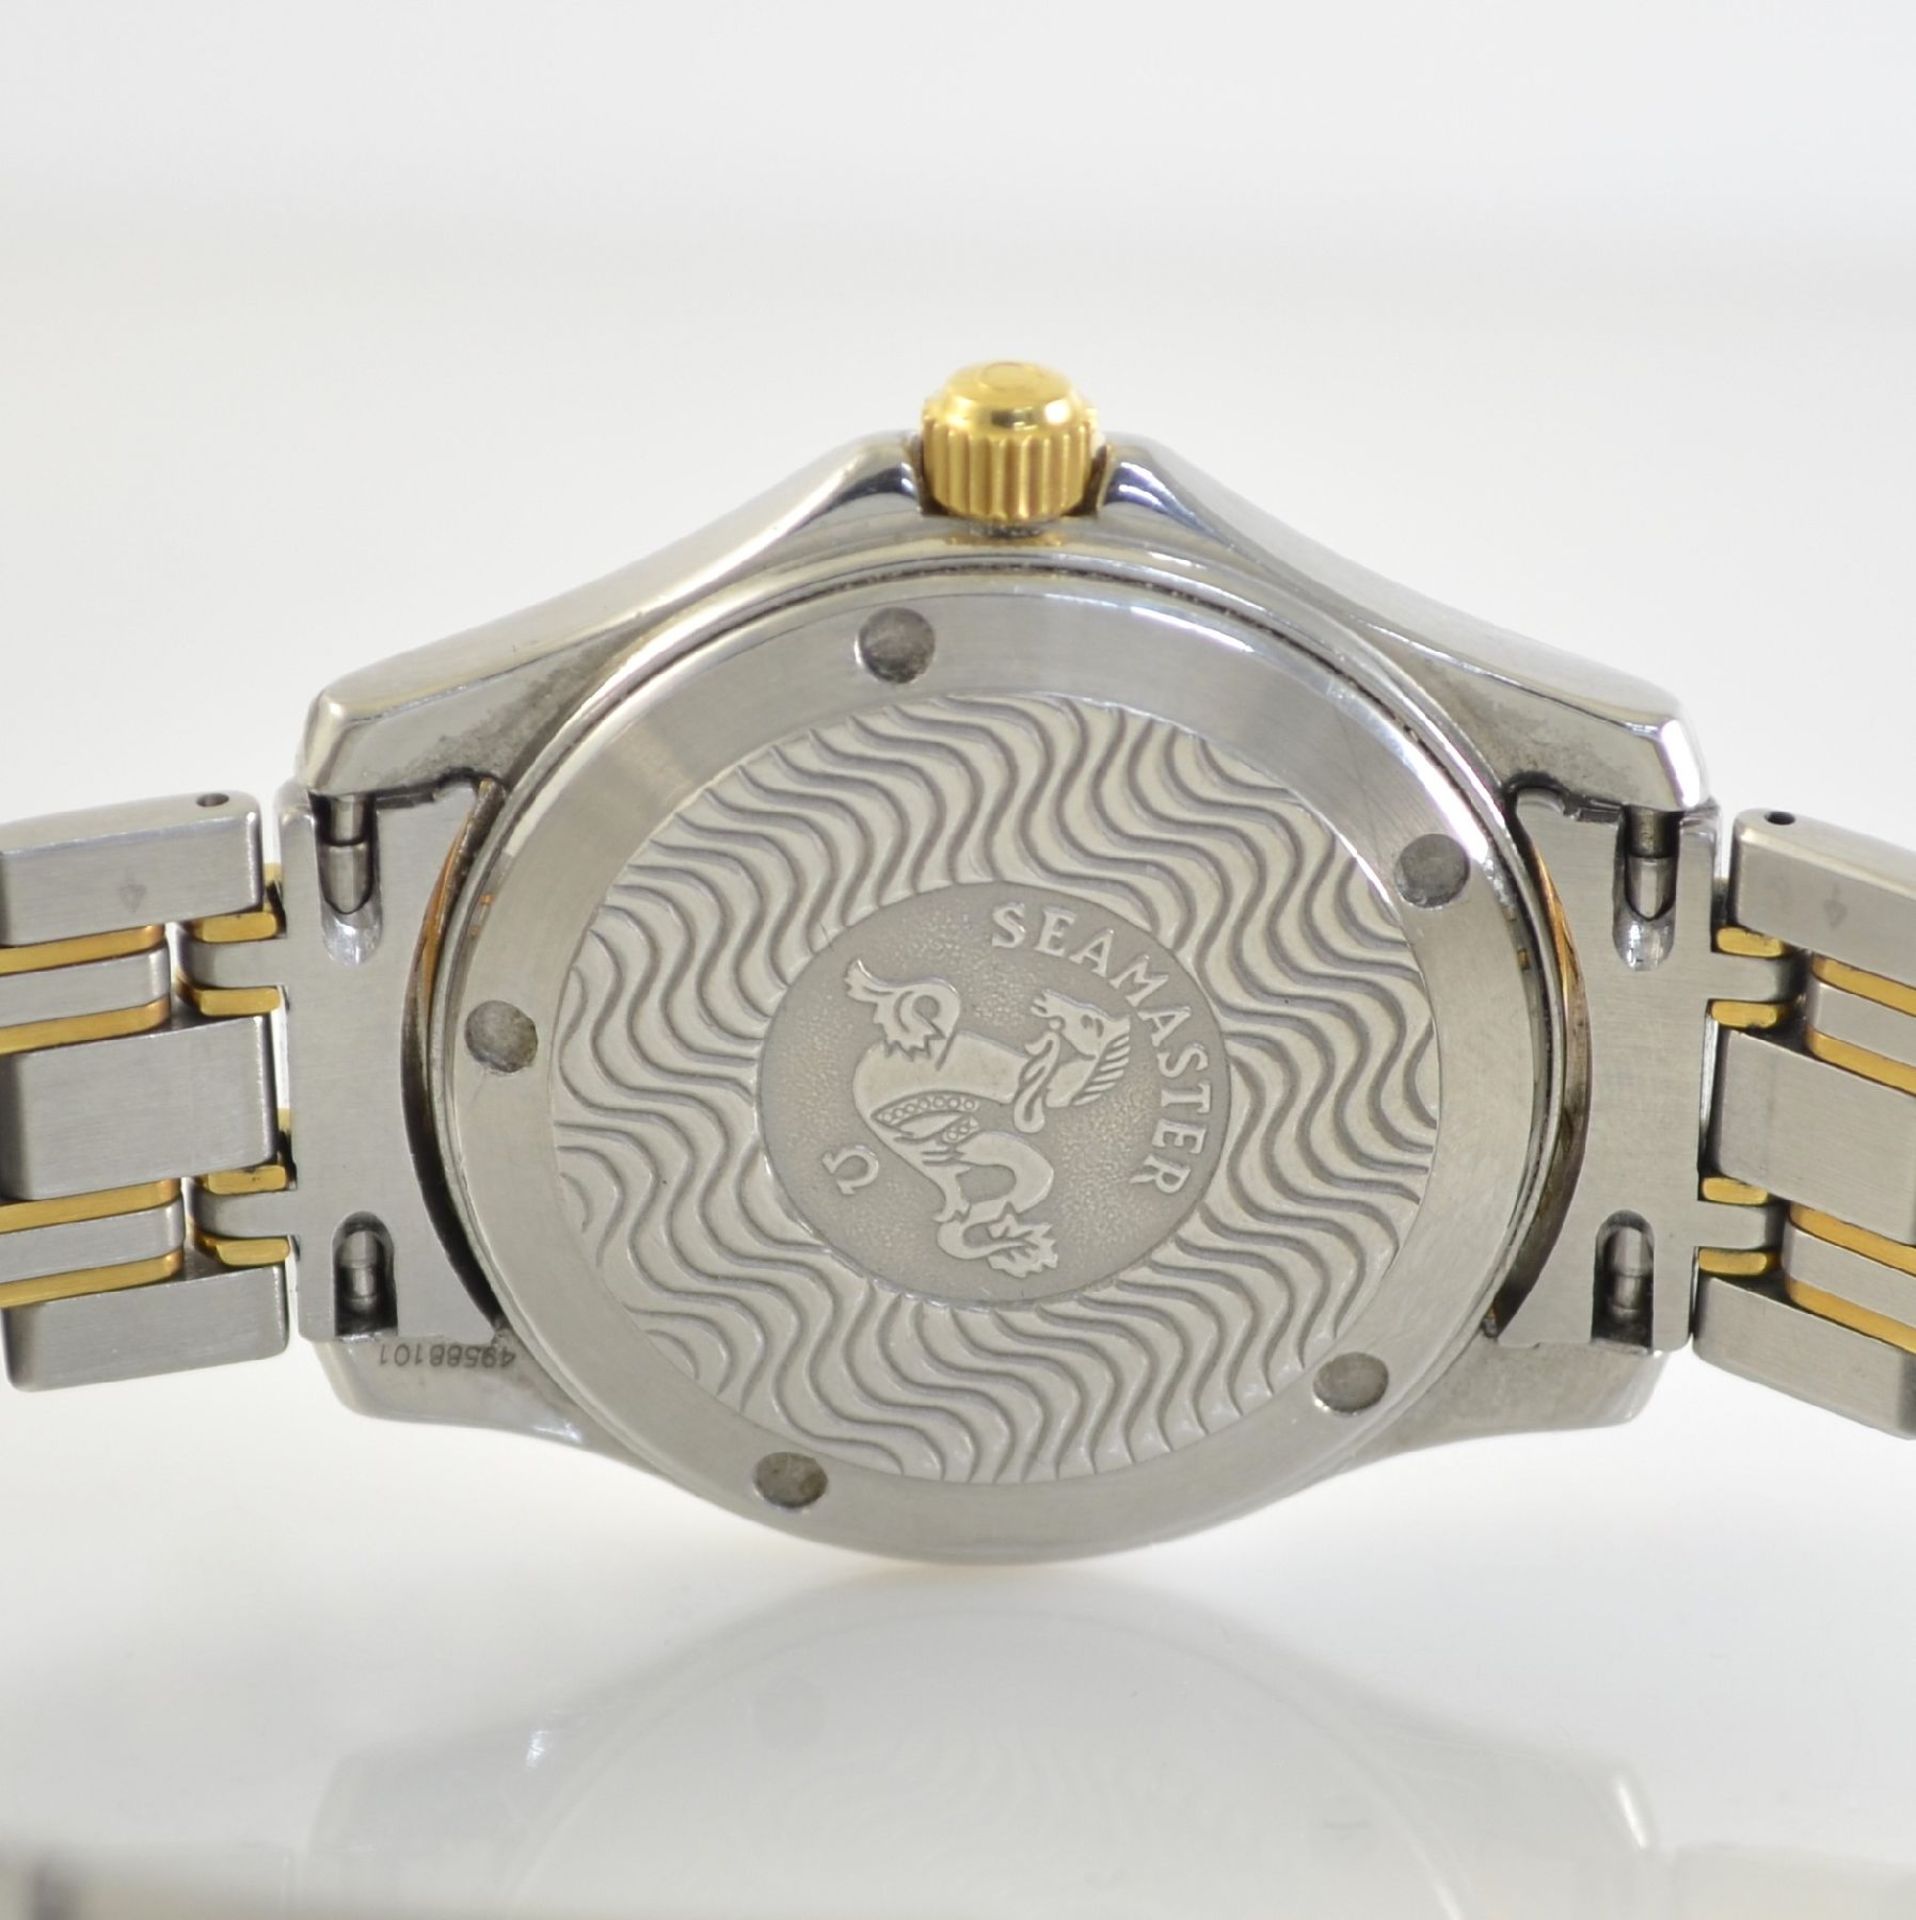 OMEGA gents wristwatch series Seamaster, Switzerland around 1996, 168.1501/196.1501, stainless - Image 6 of 6